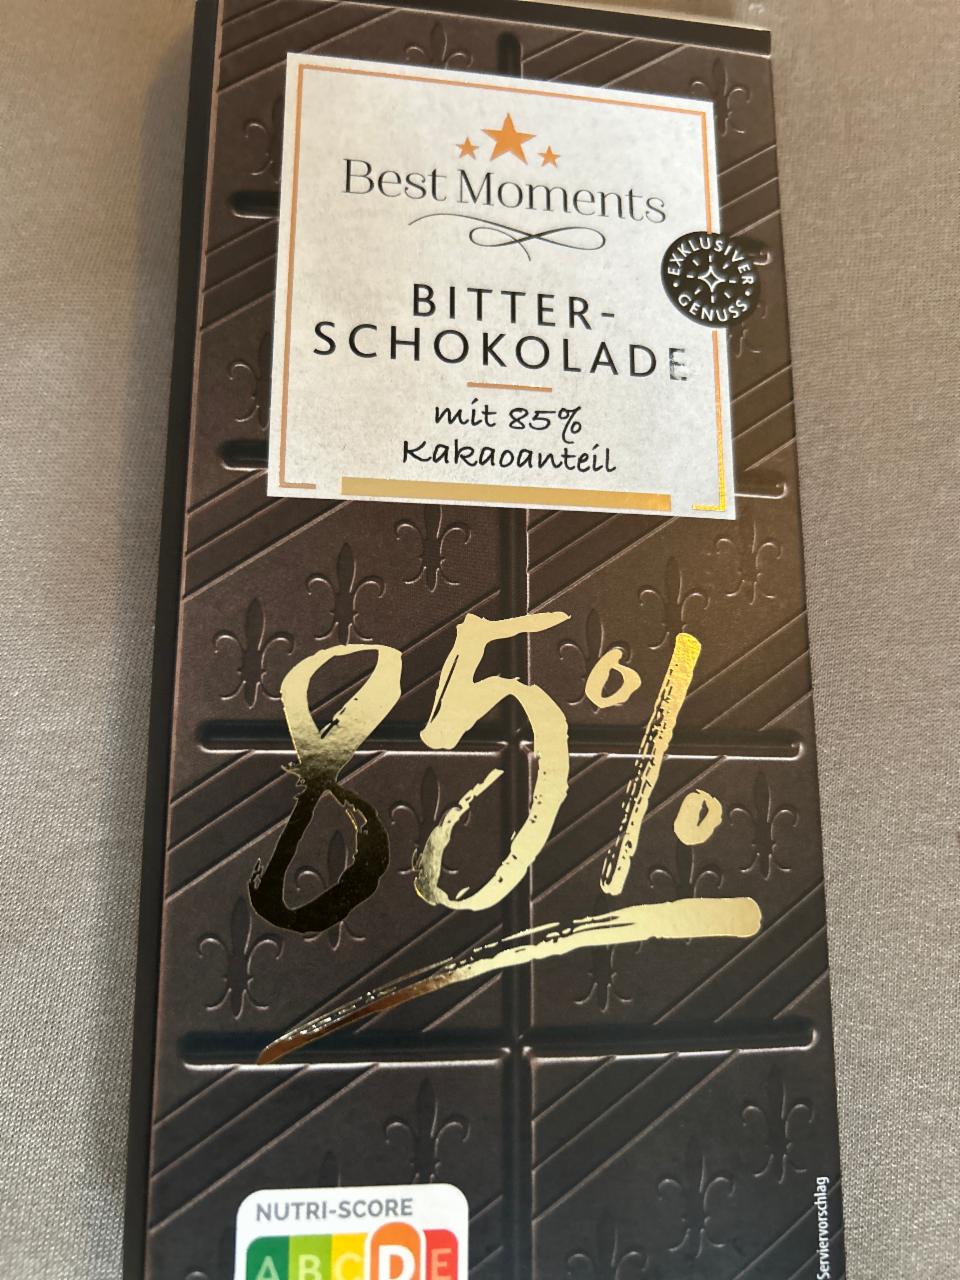 Fotografie - Bitter-Schokolade mit 85% Kakaoanteil Best Moments